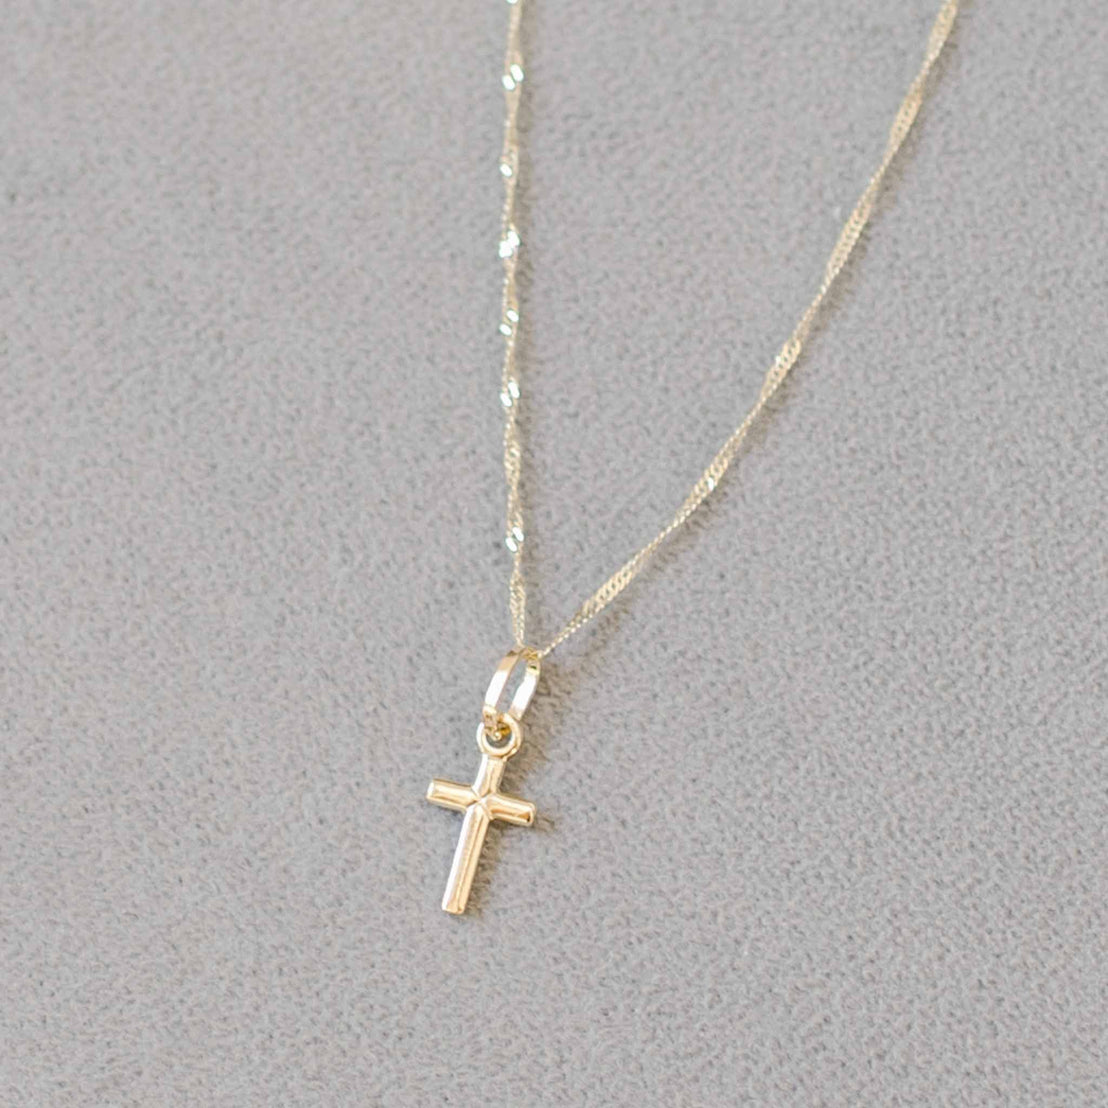 Small cross charm on chain